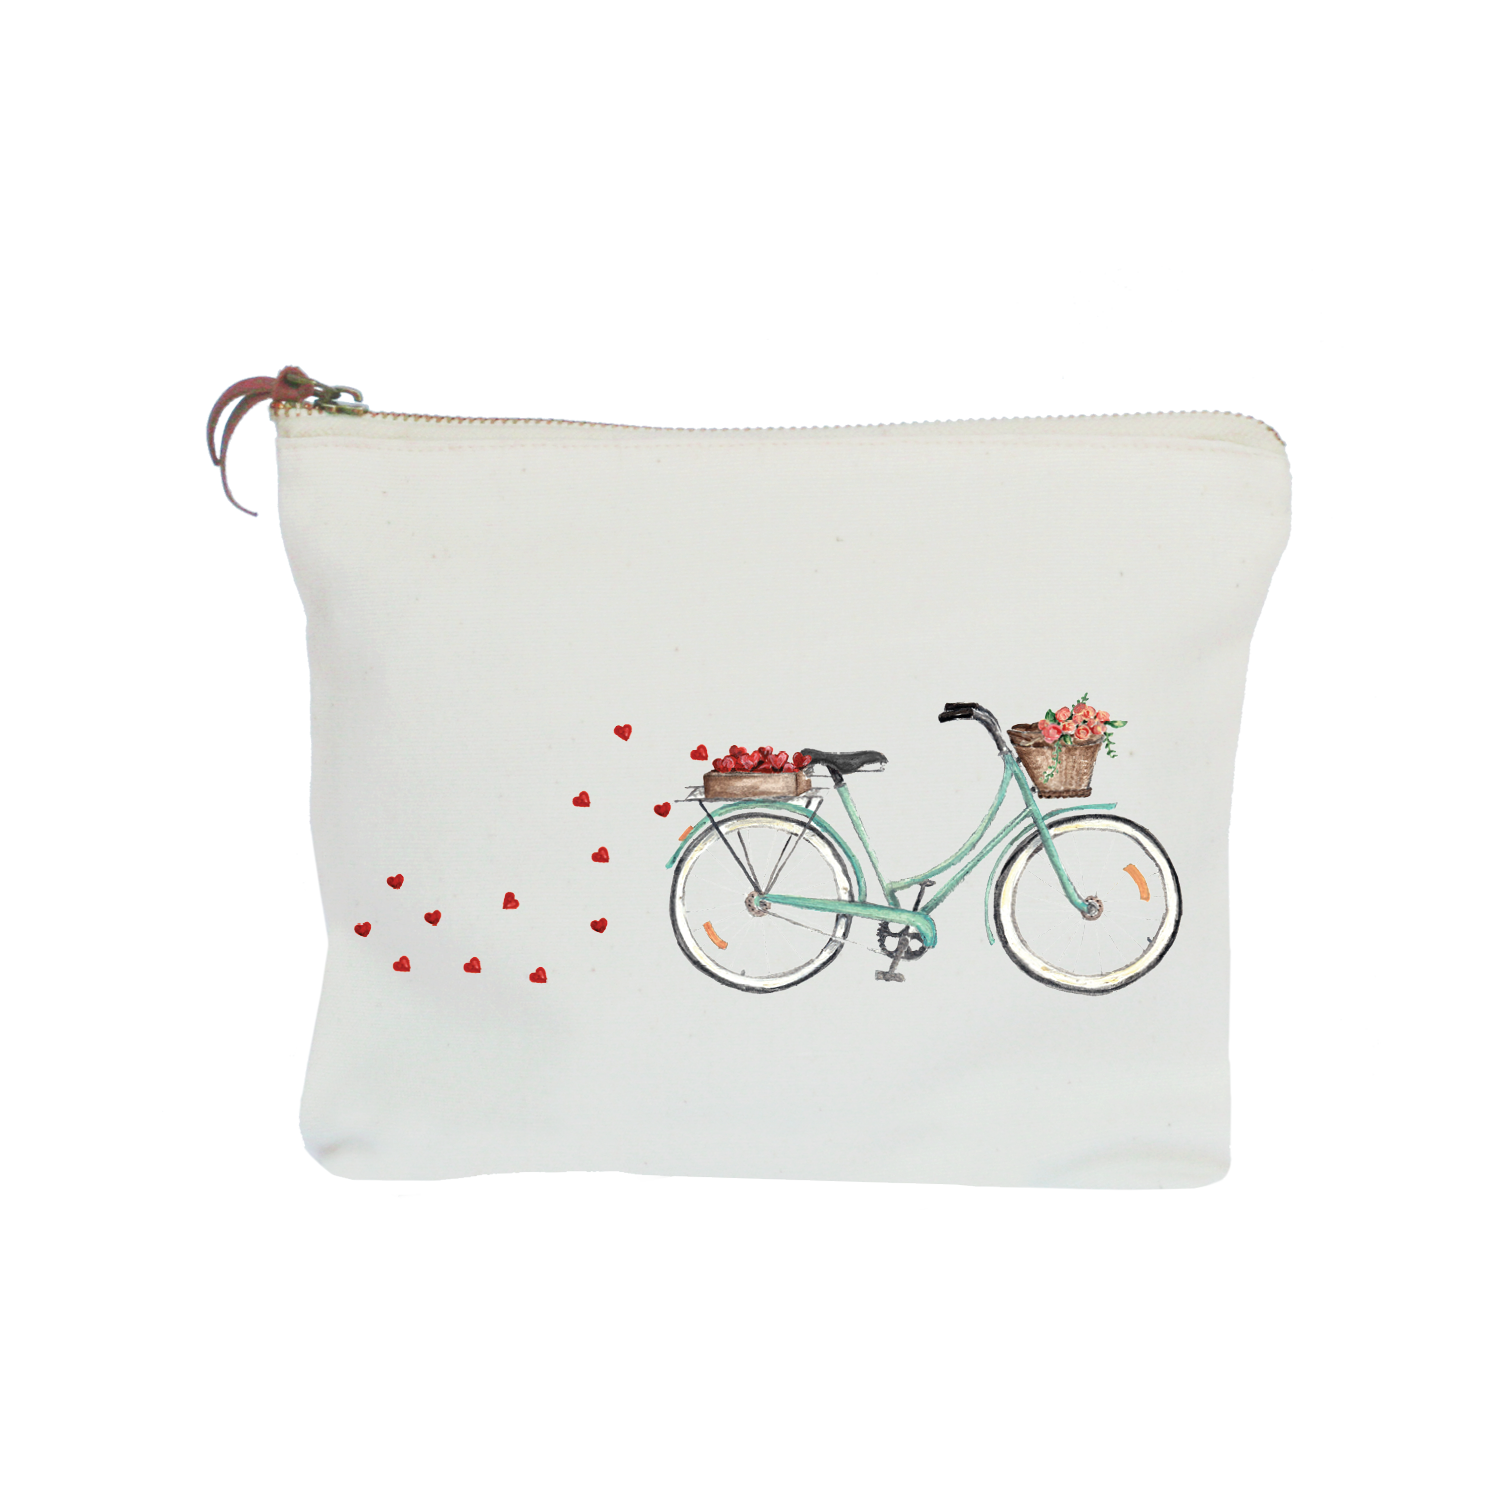 seafoam bike with hearts + roses zipper pouch